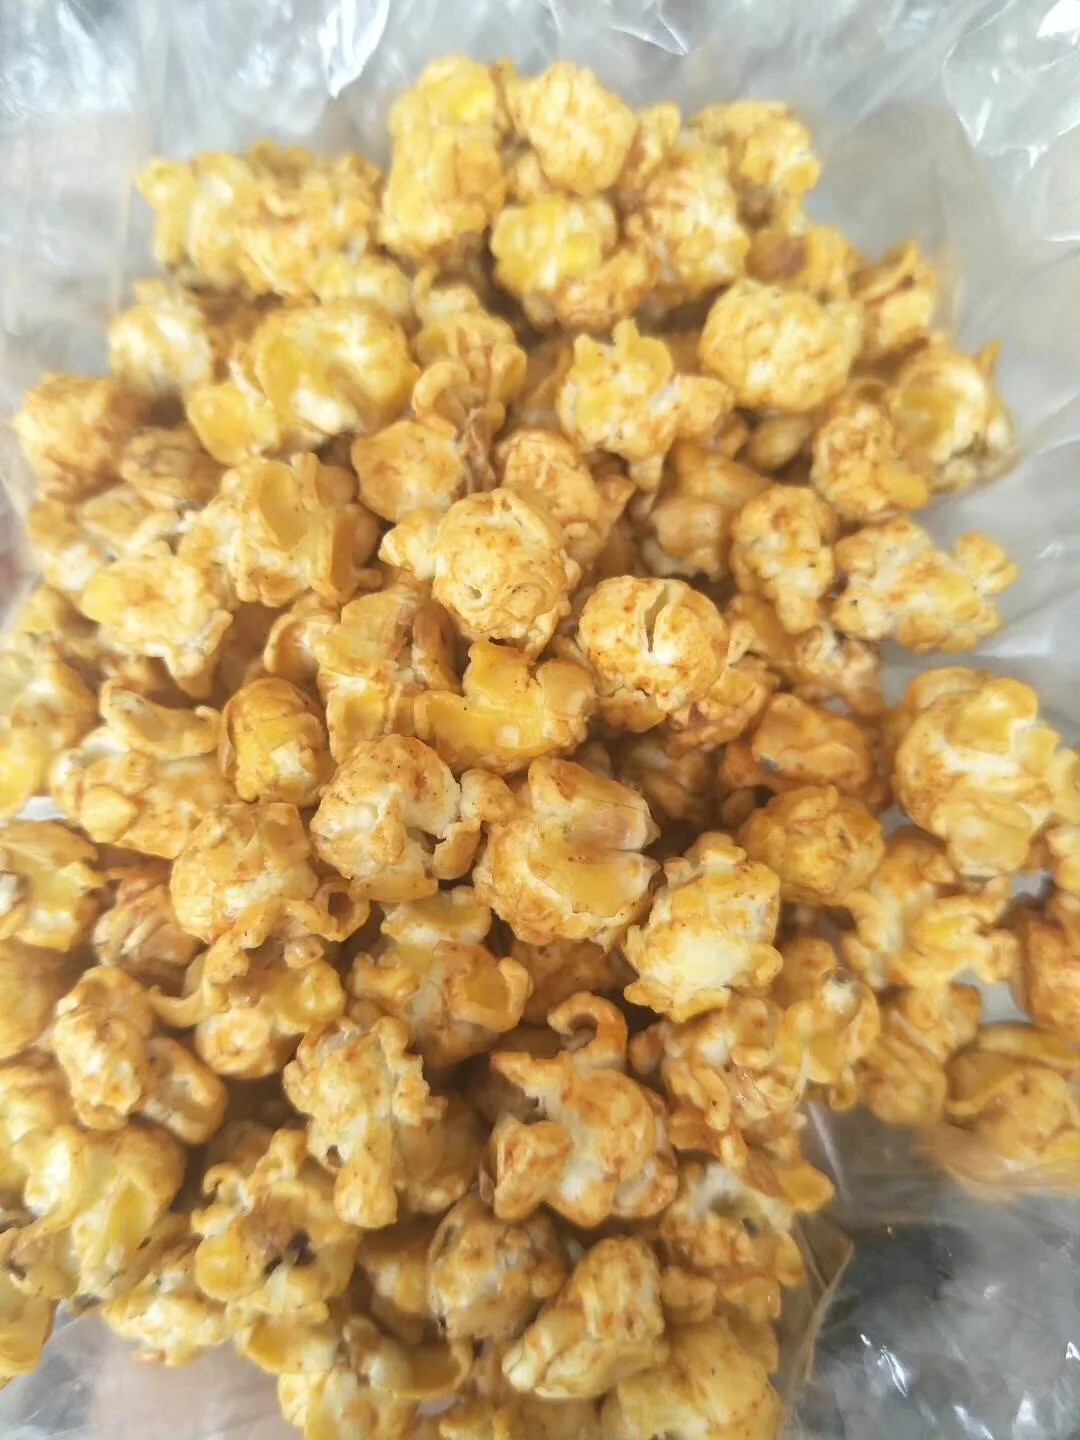 
Commercial Caramel Popcorn Making Machine Production Line from LUERYA 